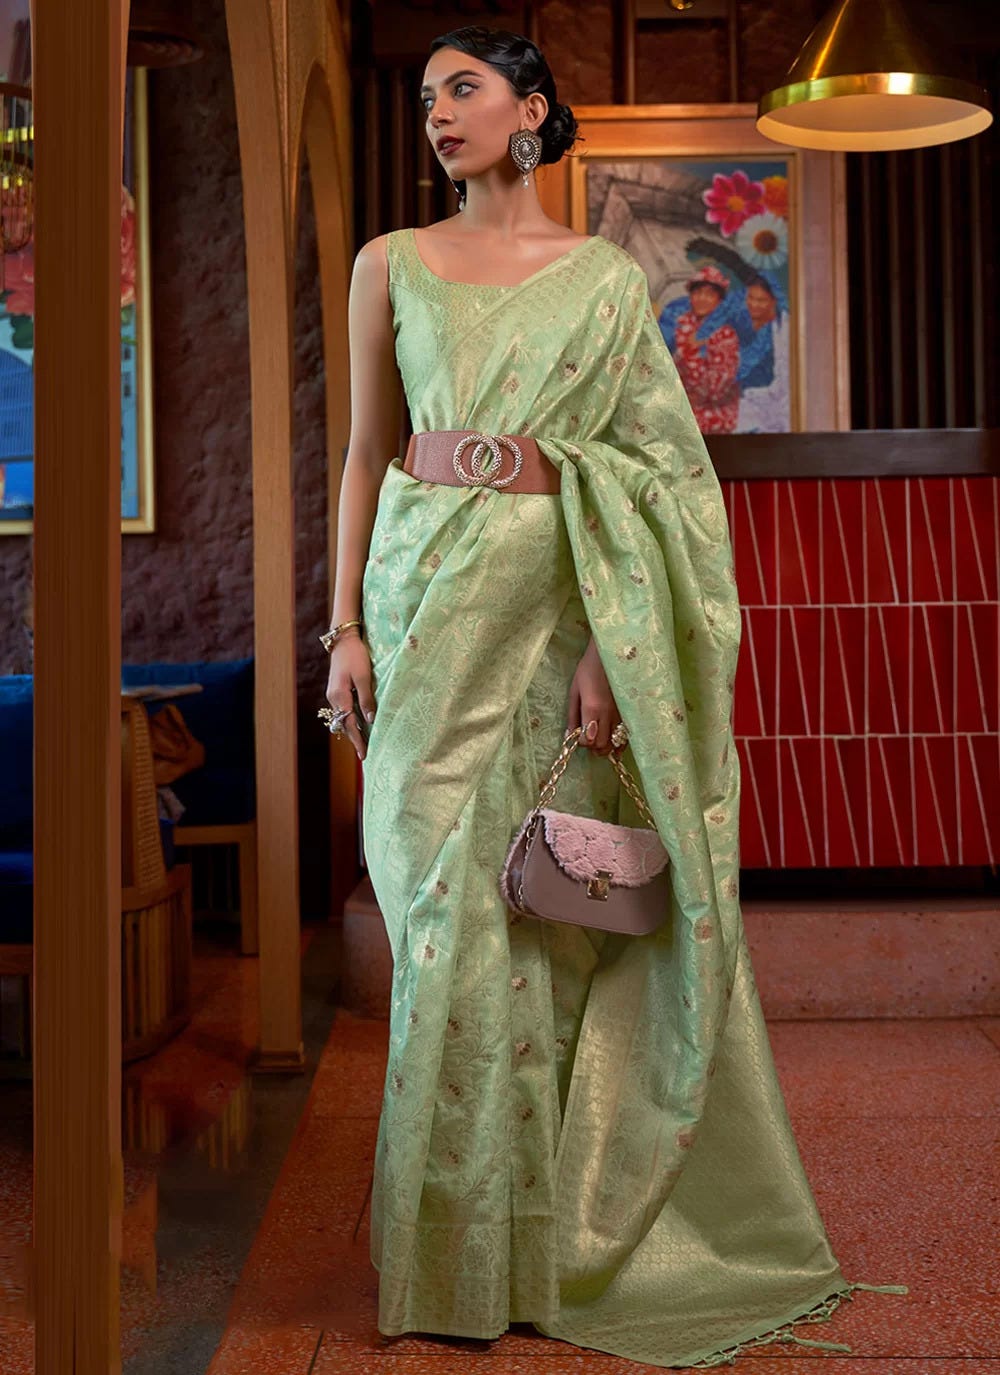 Purchase Satin Sarees Online From Salwari for a glamorous look | by Salwari  fashion | Medium